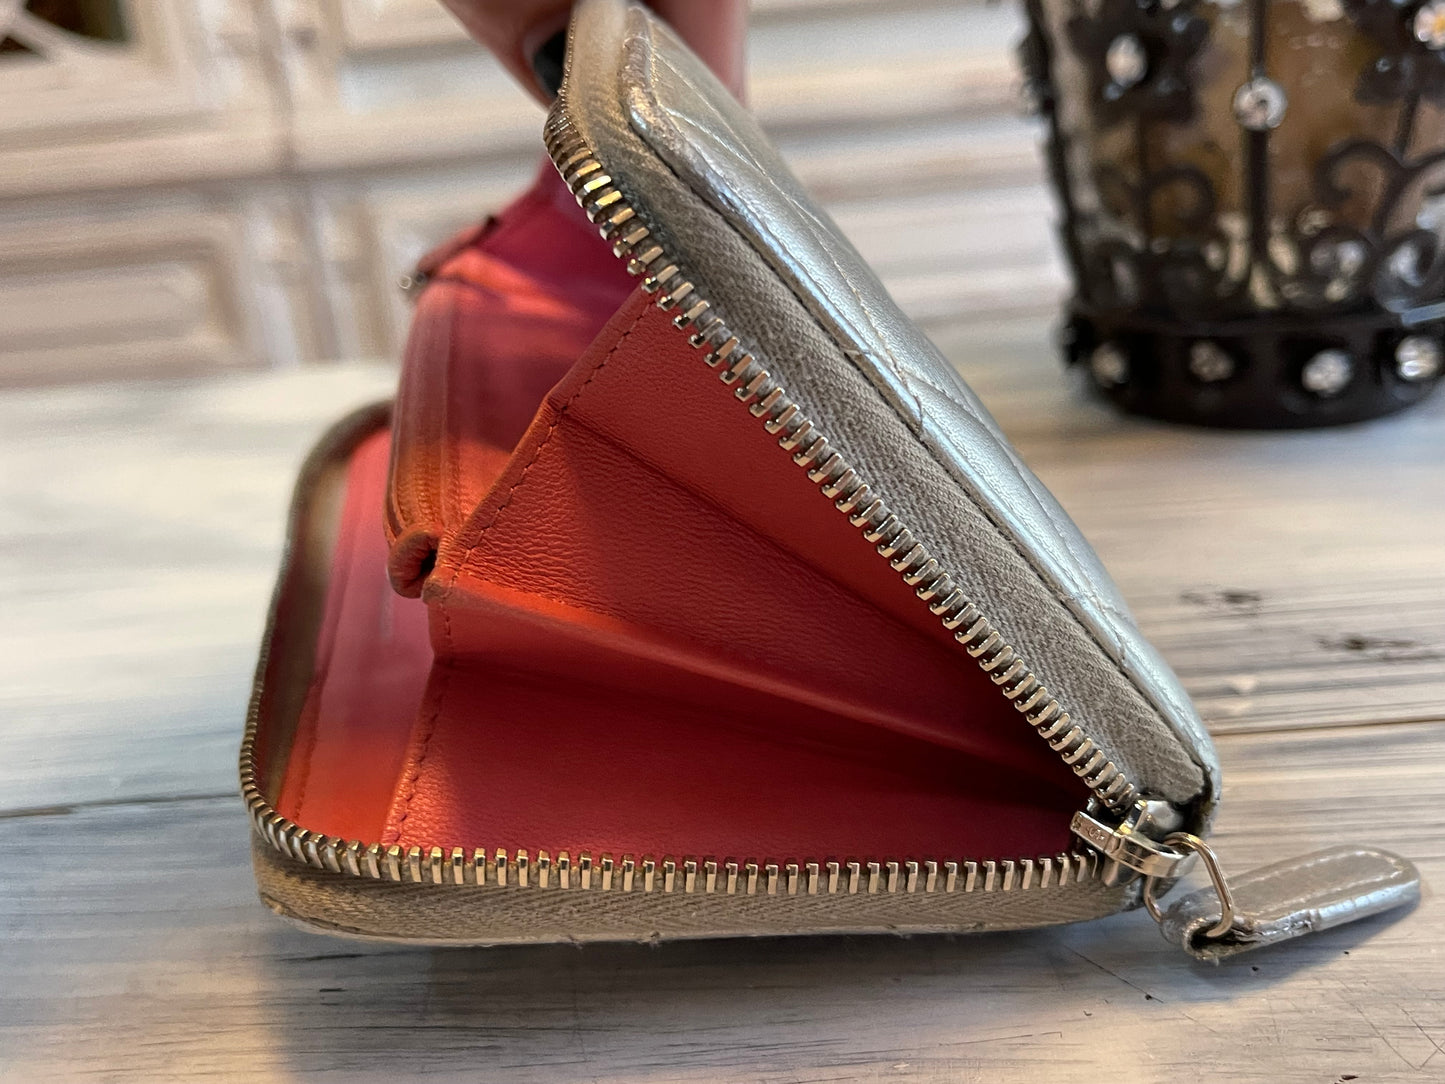 Chanel Quilted Mateslase Lambskin Silver Zip Around Wallet